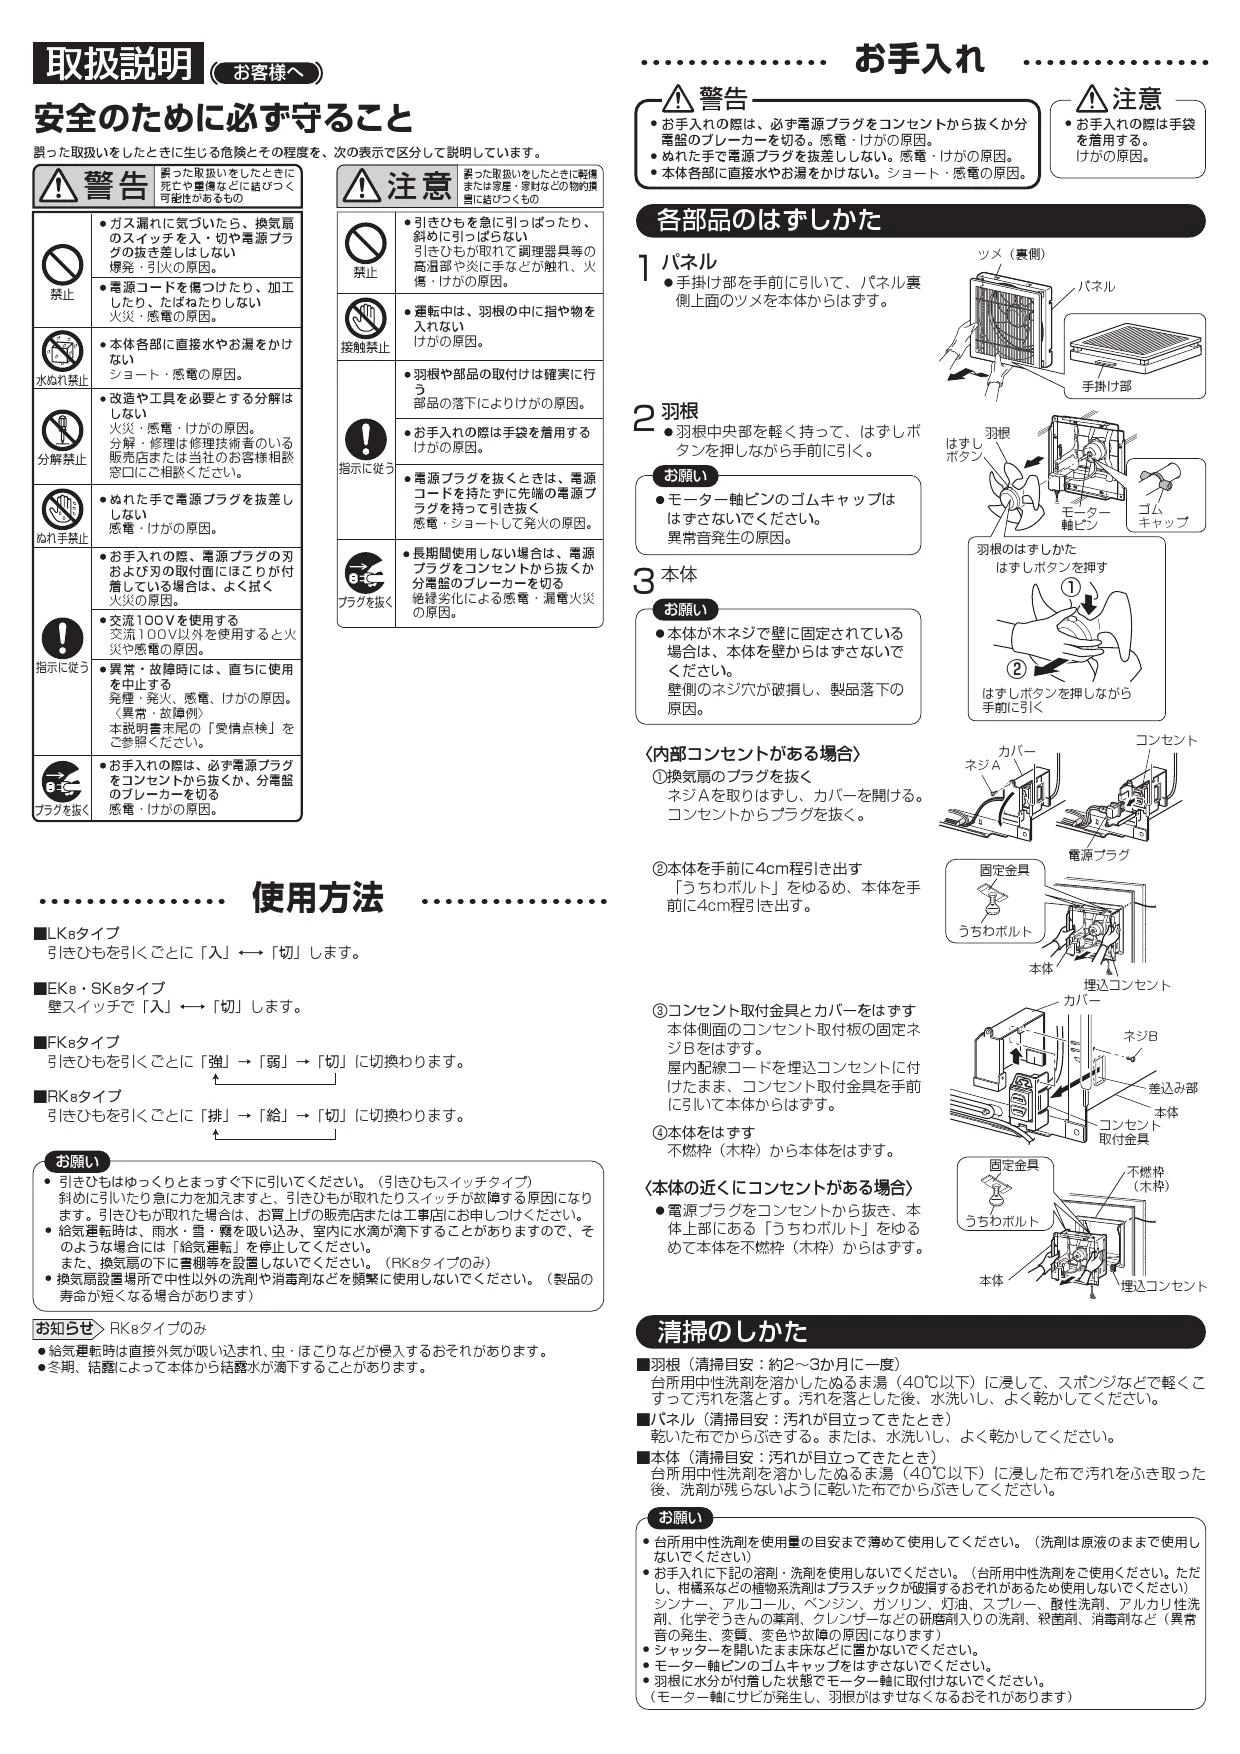 三菱電機 EX-30RK8-C 取扱説明書 納入仕様図|三菱電機 居間用換気扇の 